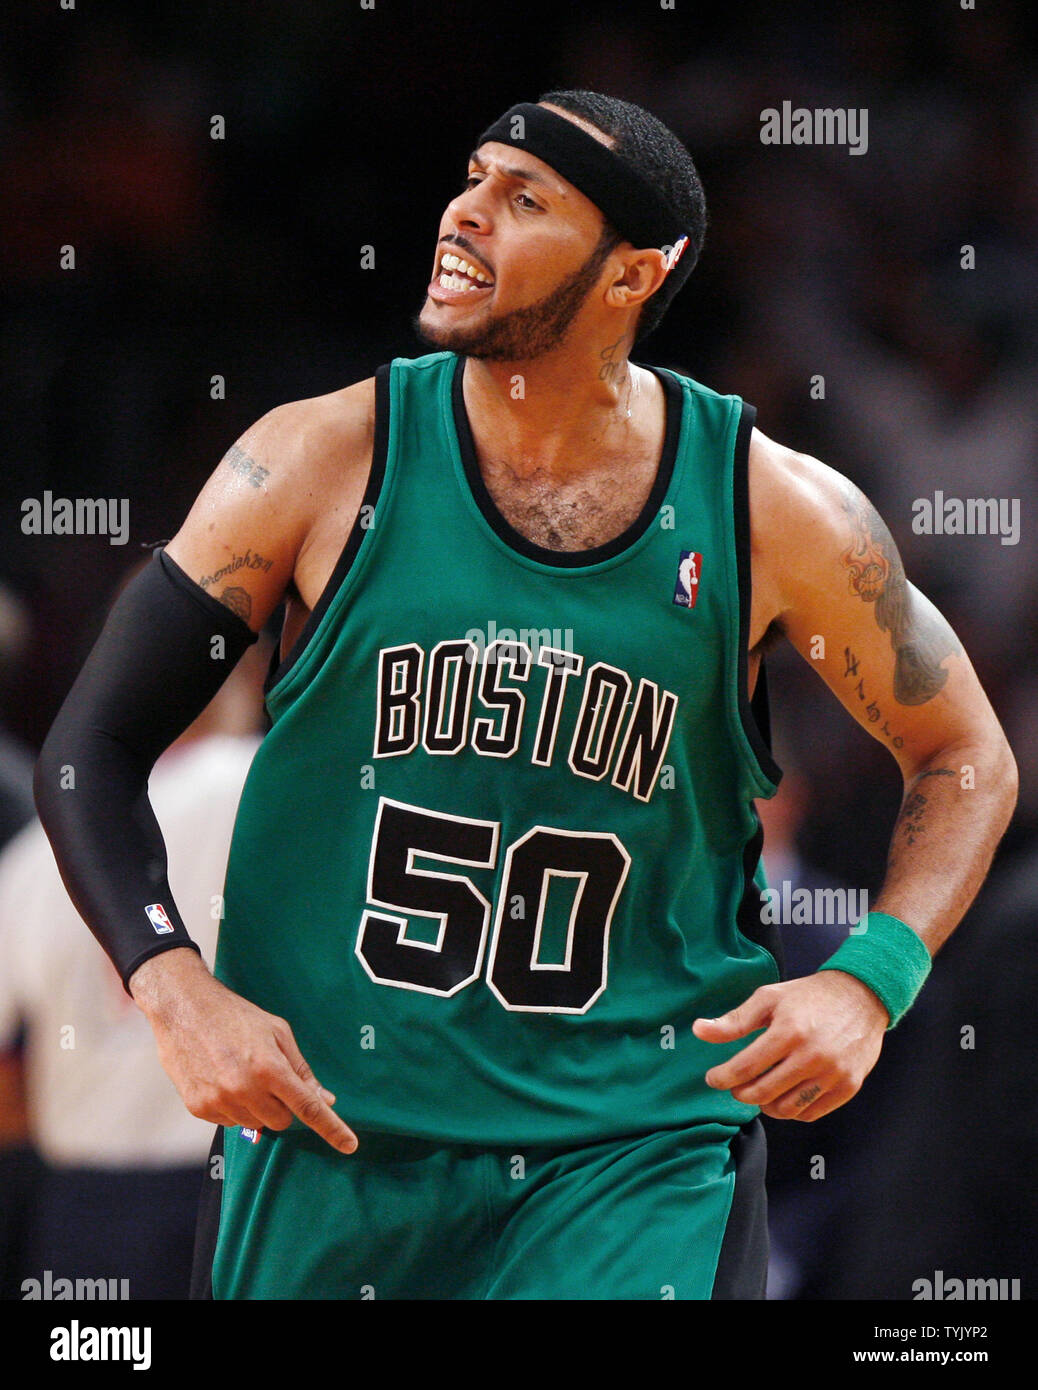 2008 Eddie House NBA Finals Worn Boston Celtics Jersey with, Lot #59718